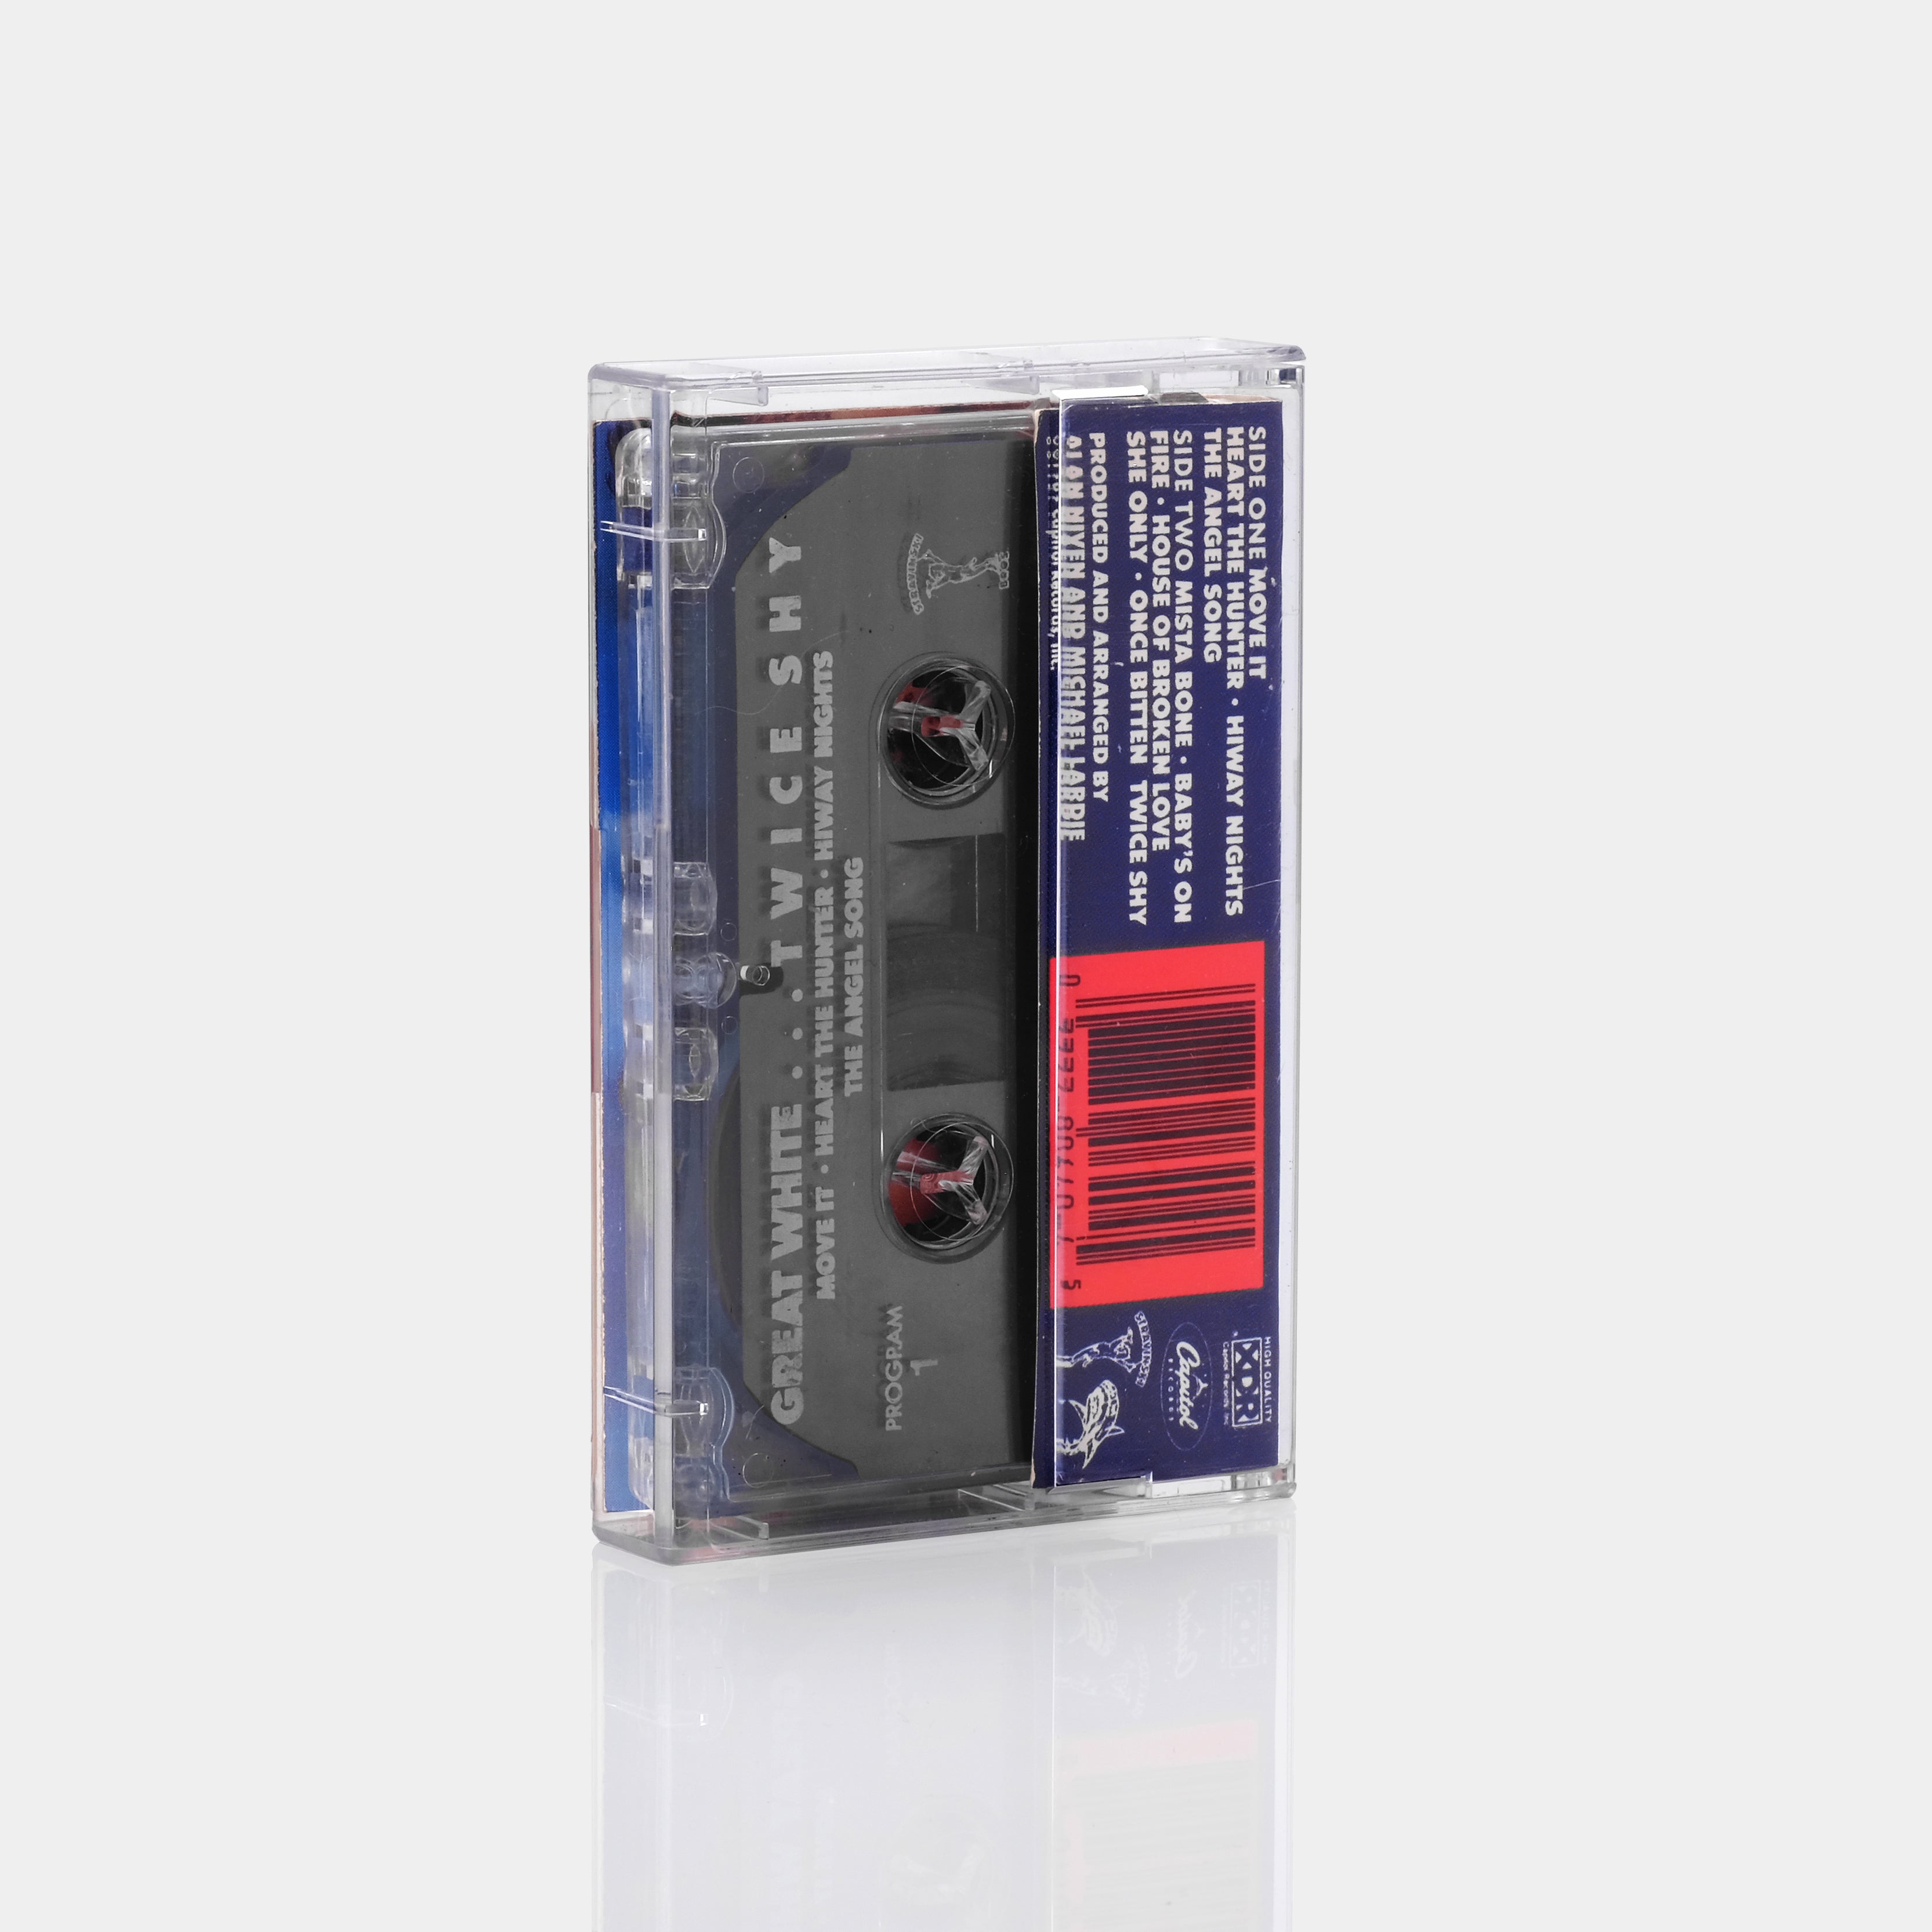 Great White - Twice Shy Cassette Tape